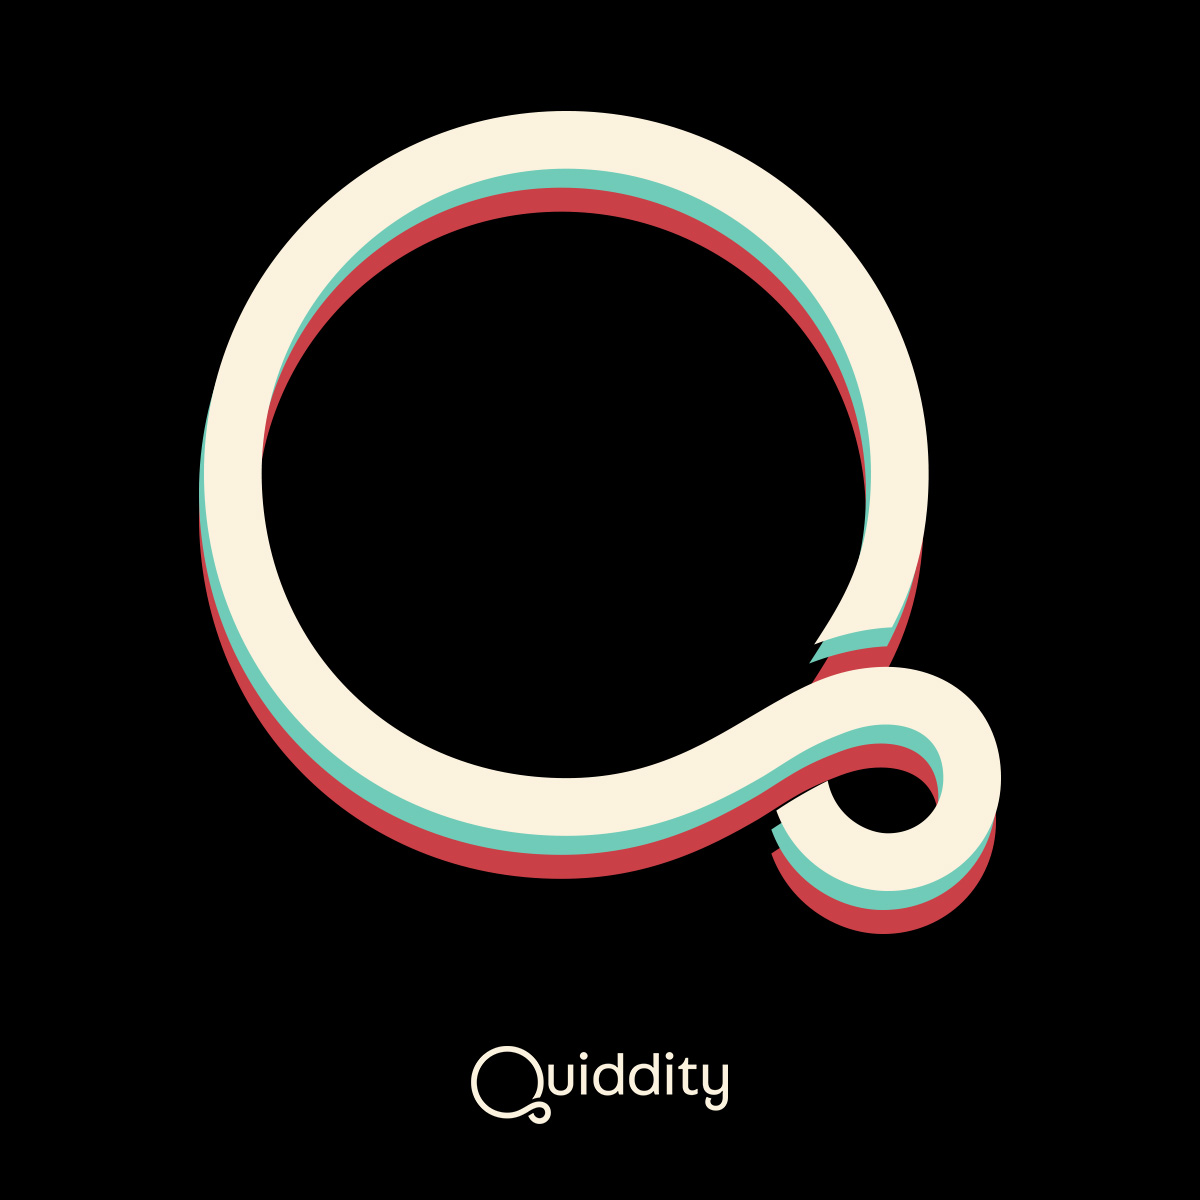 Quiddity_Social_0000_Layer Comp 1.jpg